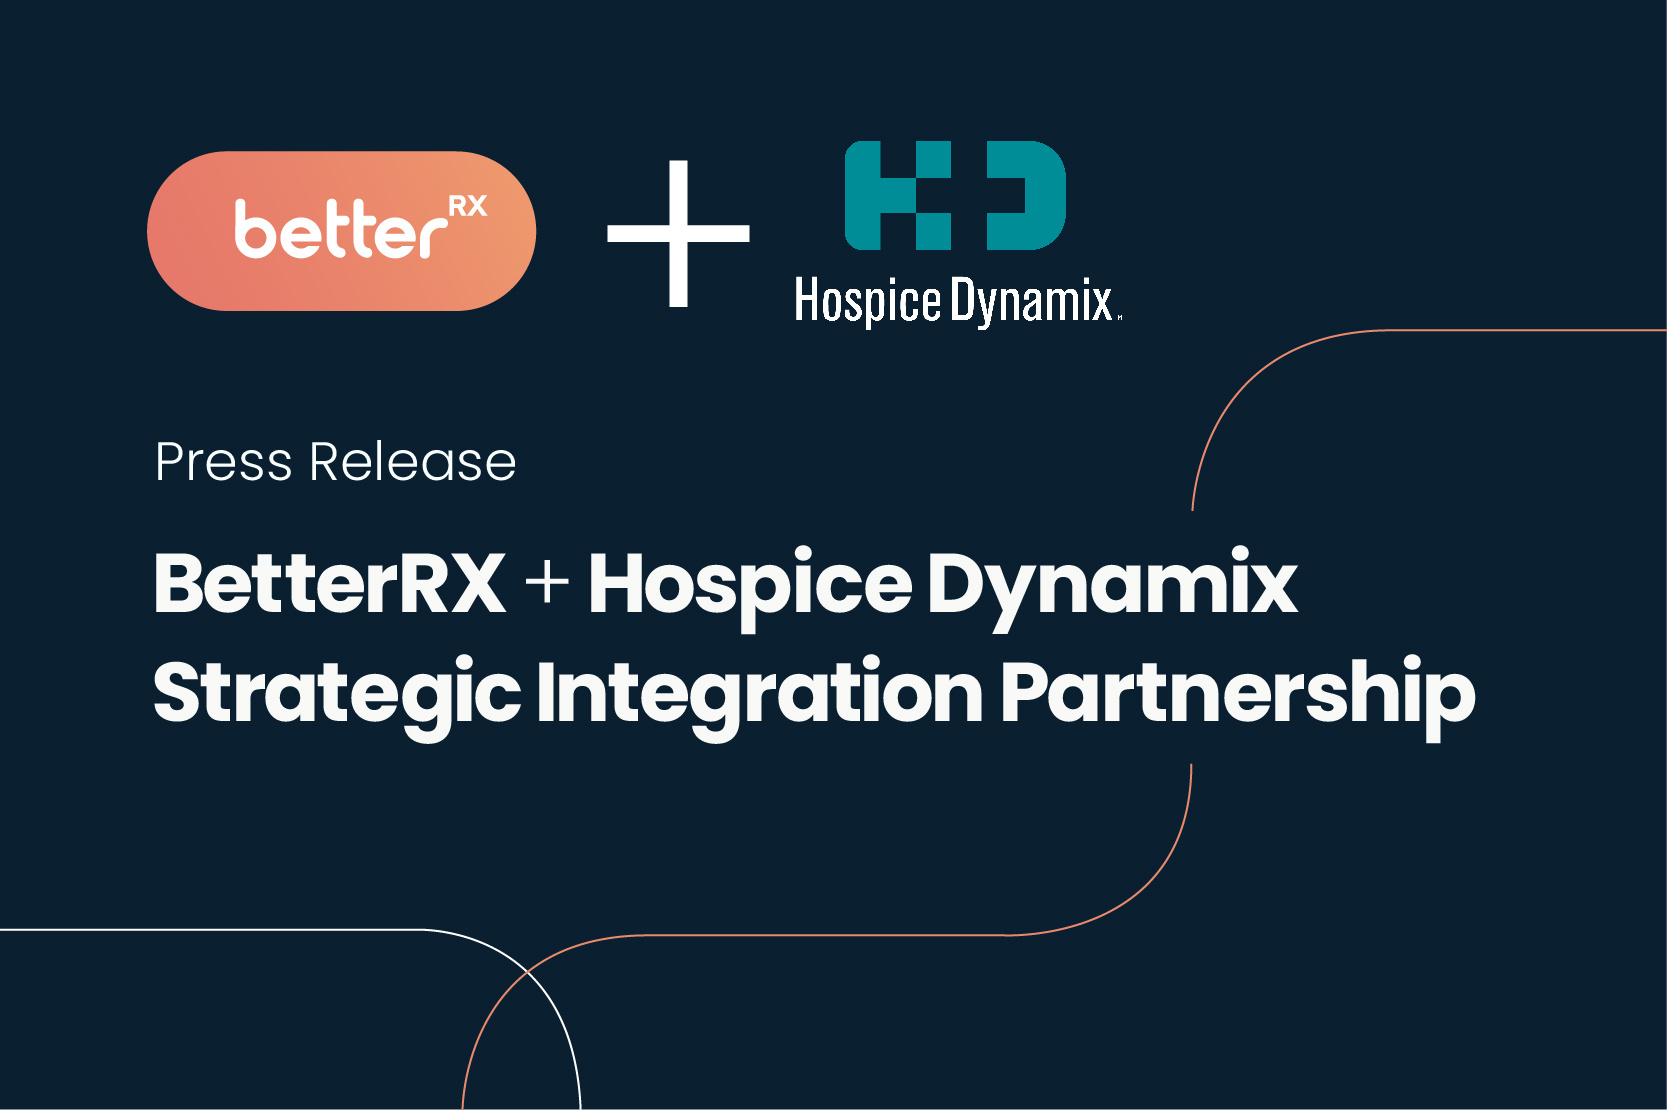 Press Release: Hospice Dynamix & BetterRX